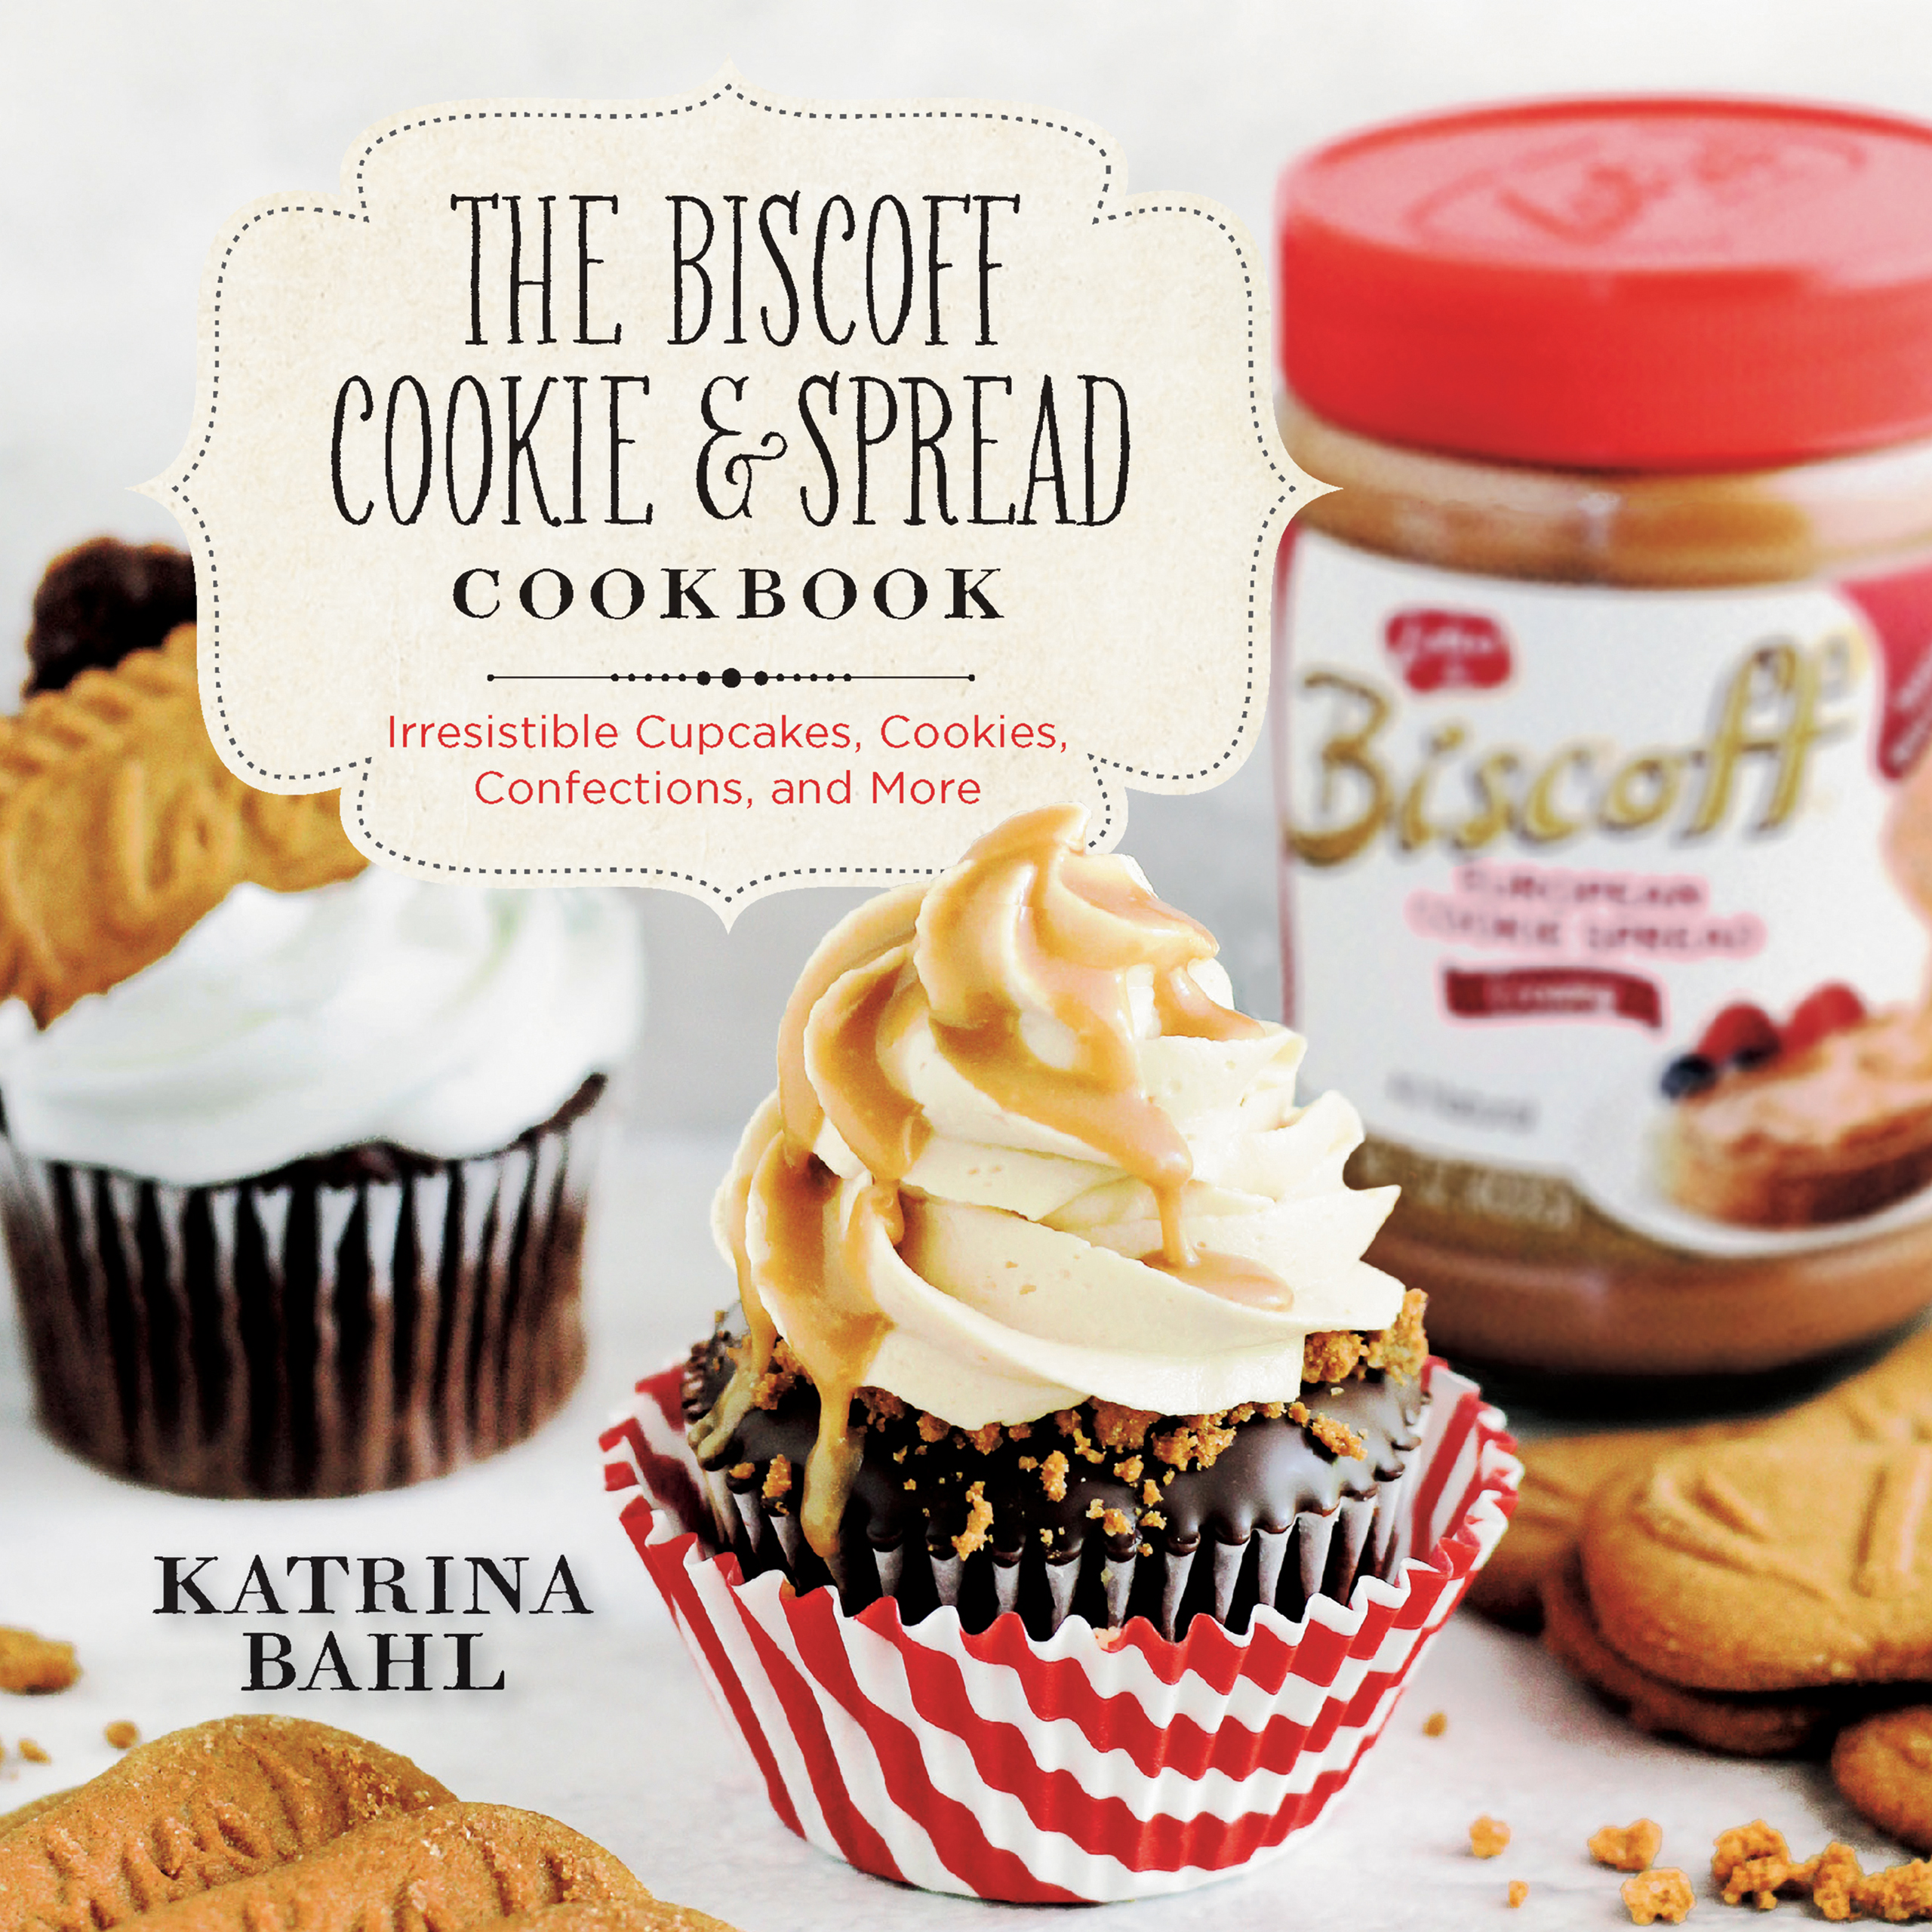 The Biscoff Cookie & Spread Cookbook